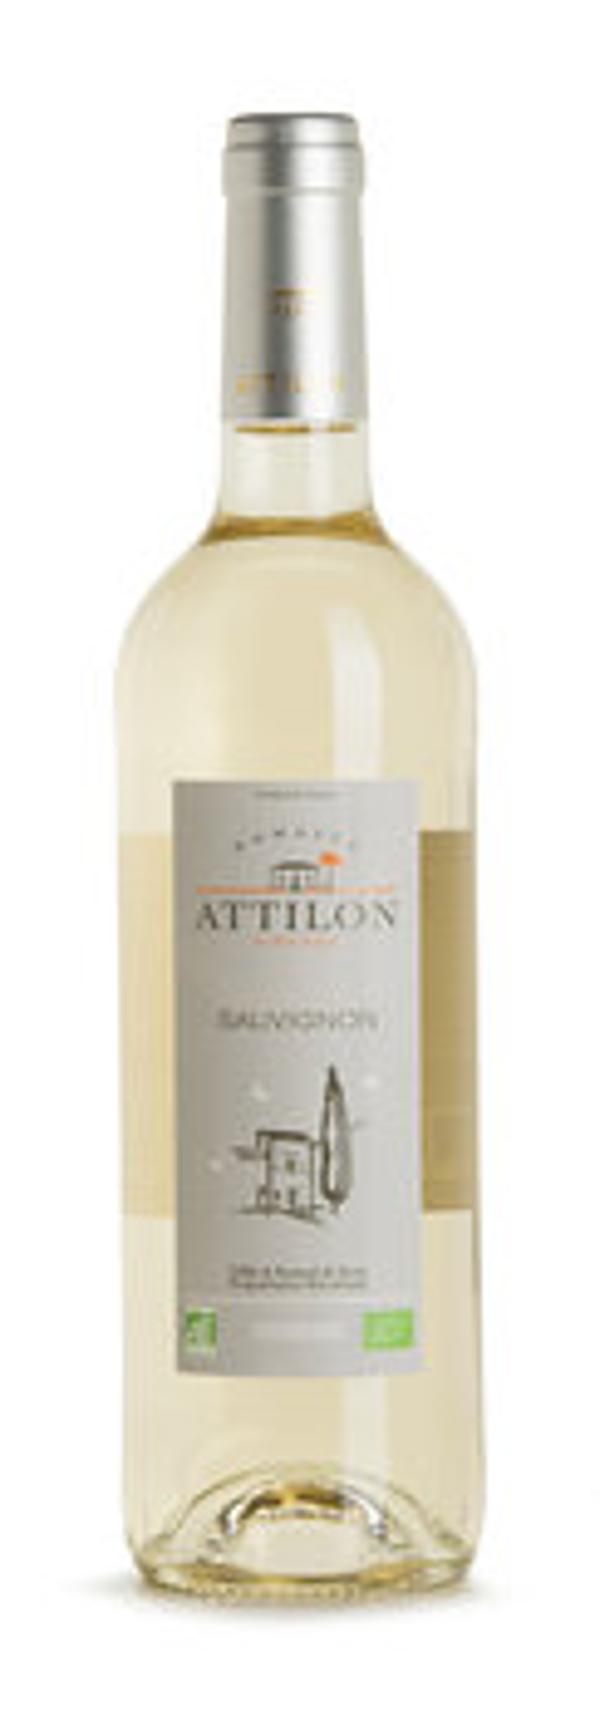 Produktfoto zu Attilon Sauvignon Blanc, 0,75 l - 10% reduziert